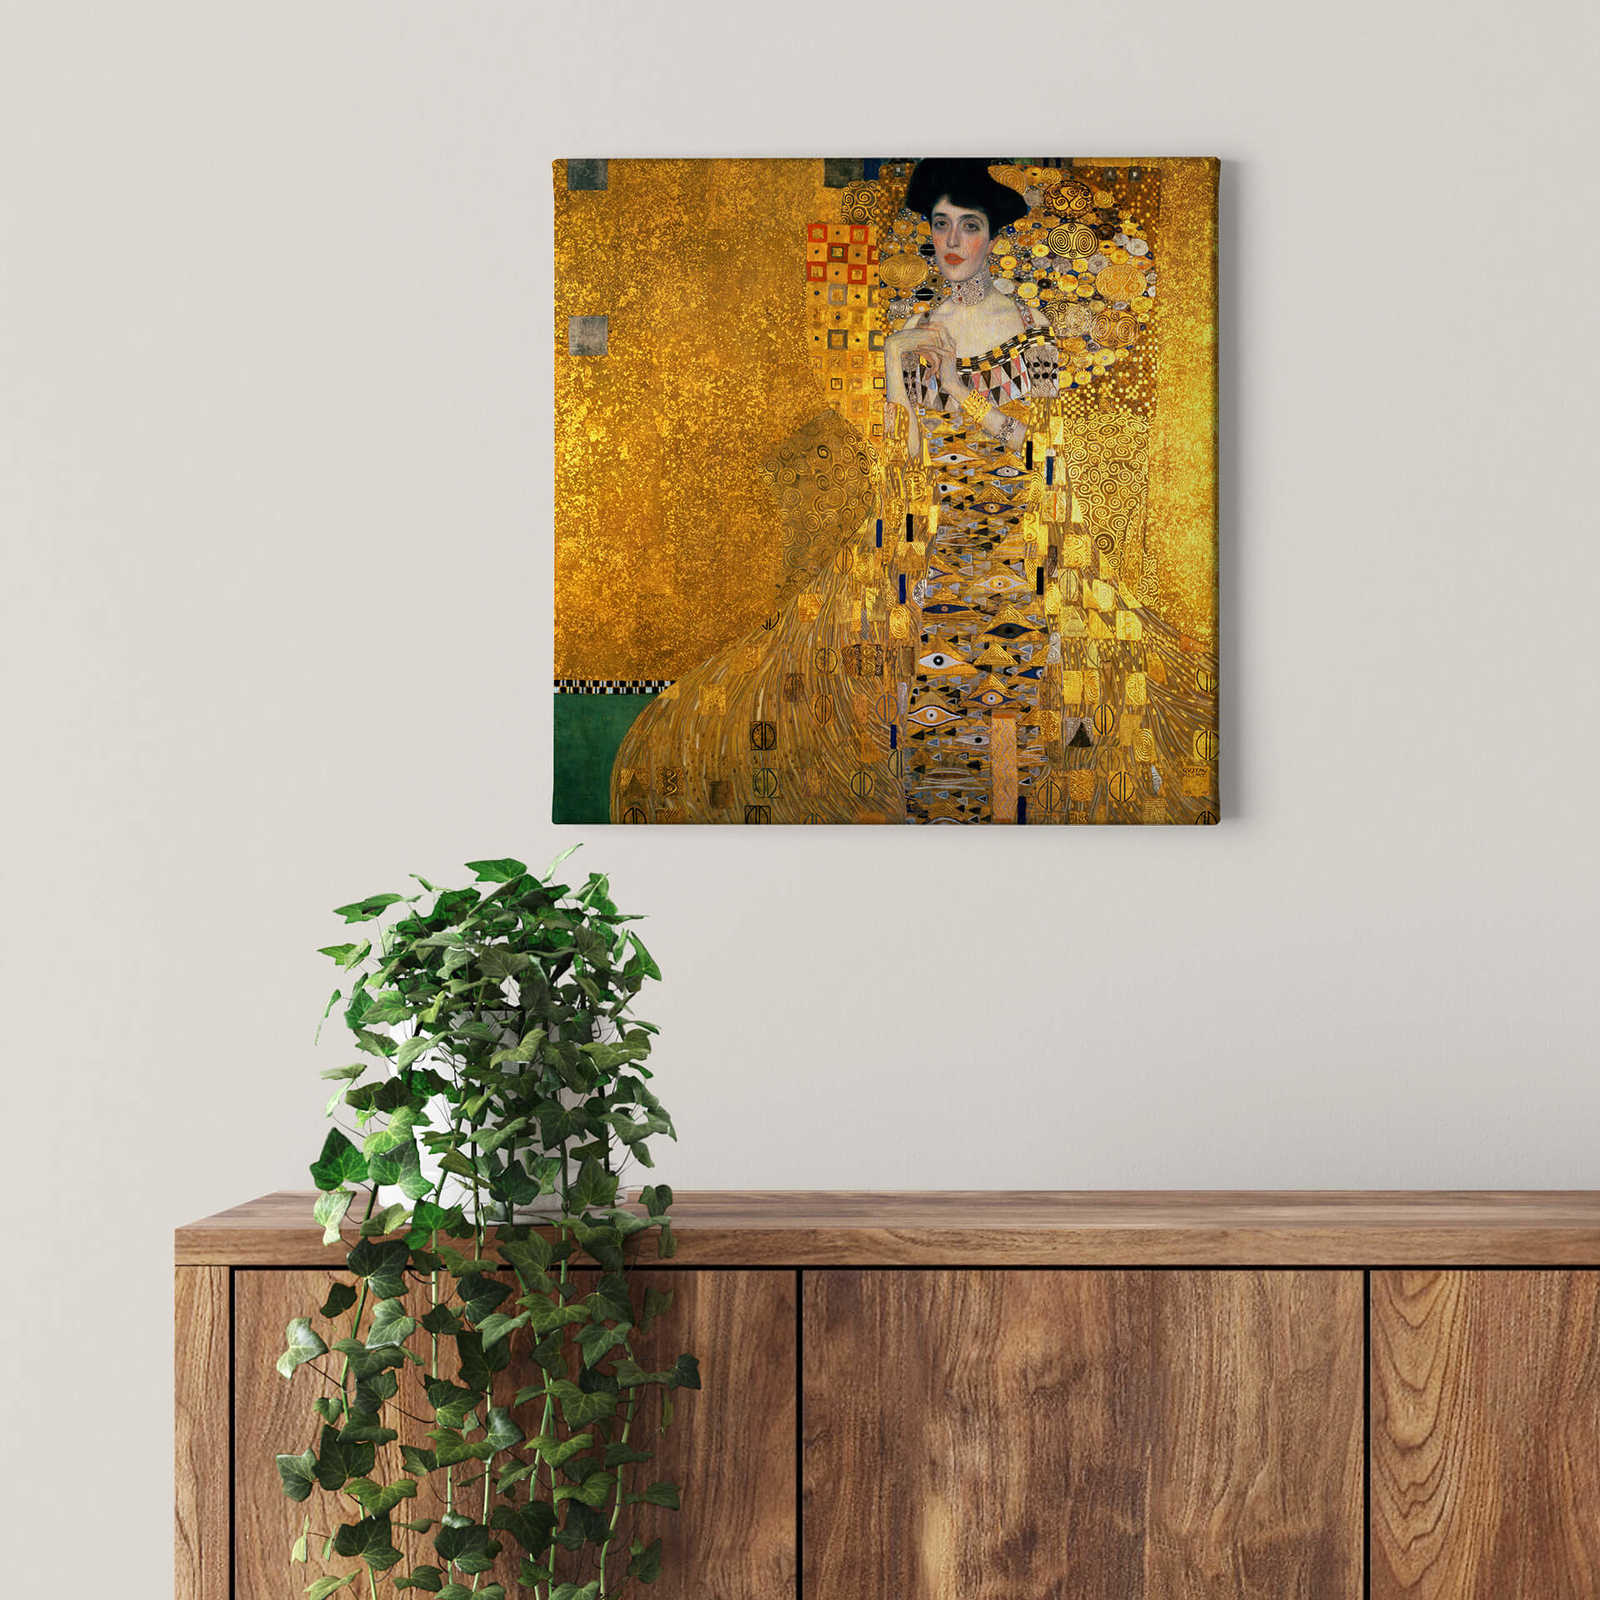             Lienzo Cuadrado "Adele" Gustav Klimt - 0,50 m x 0,50 m
        